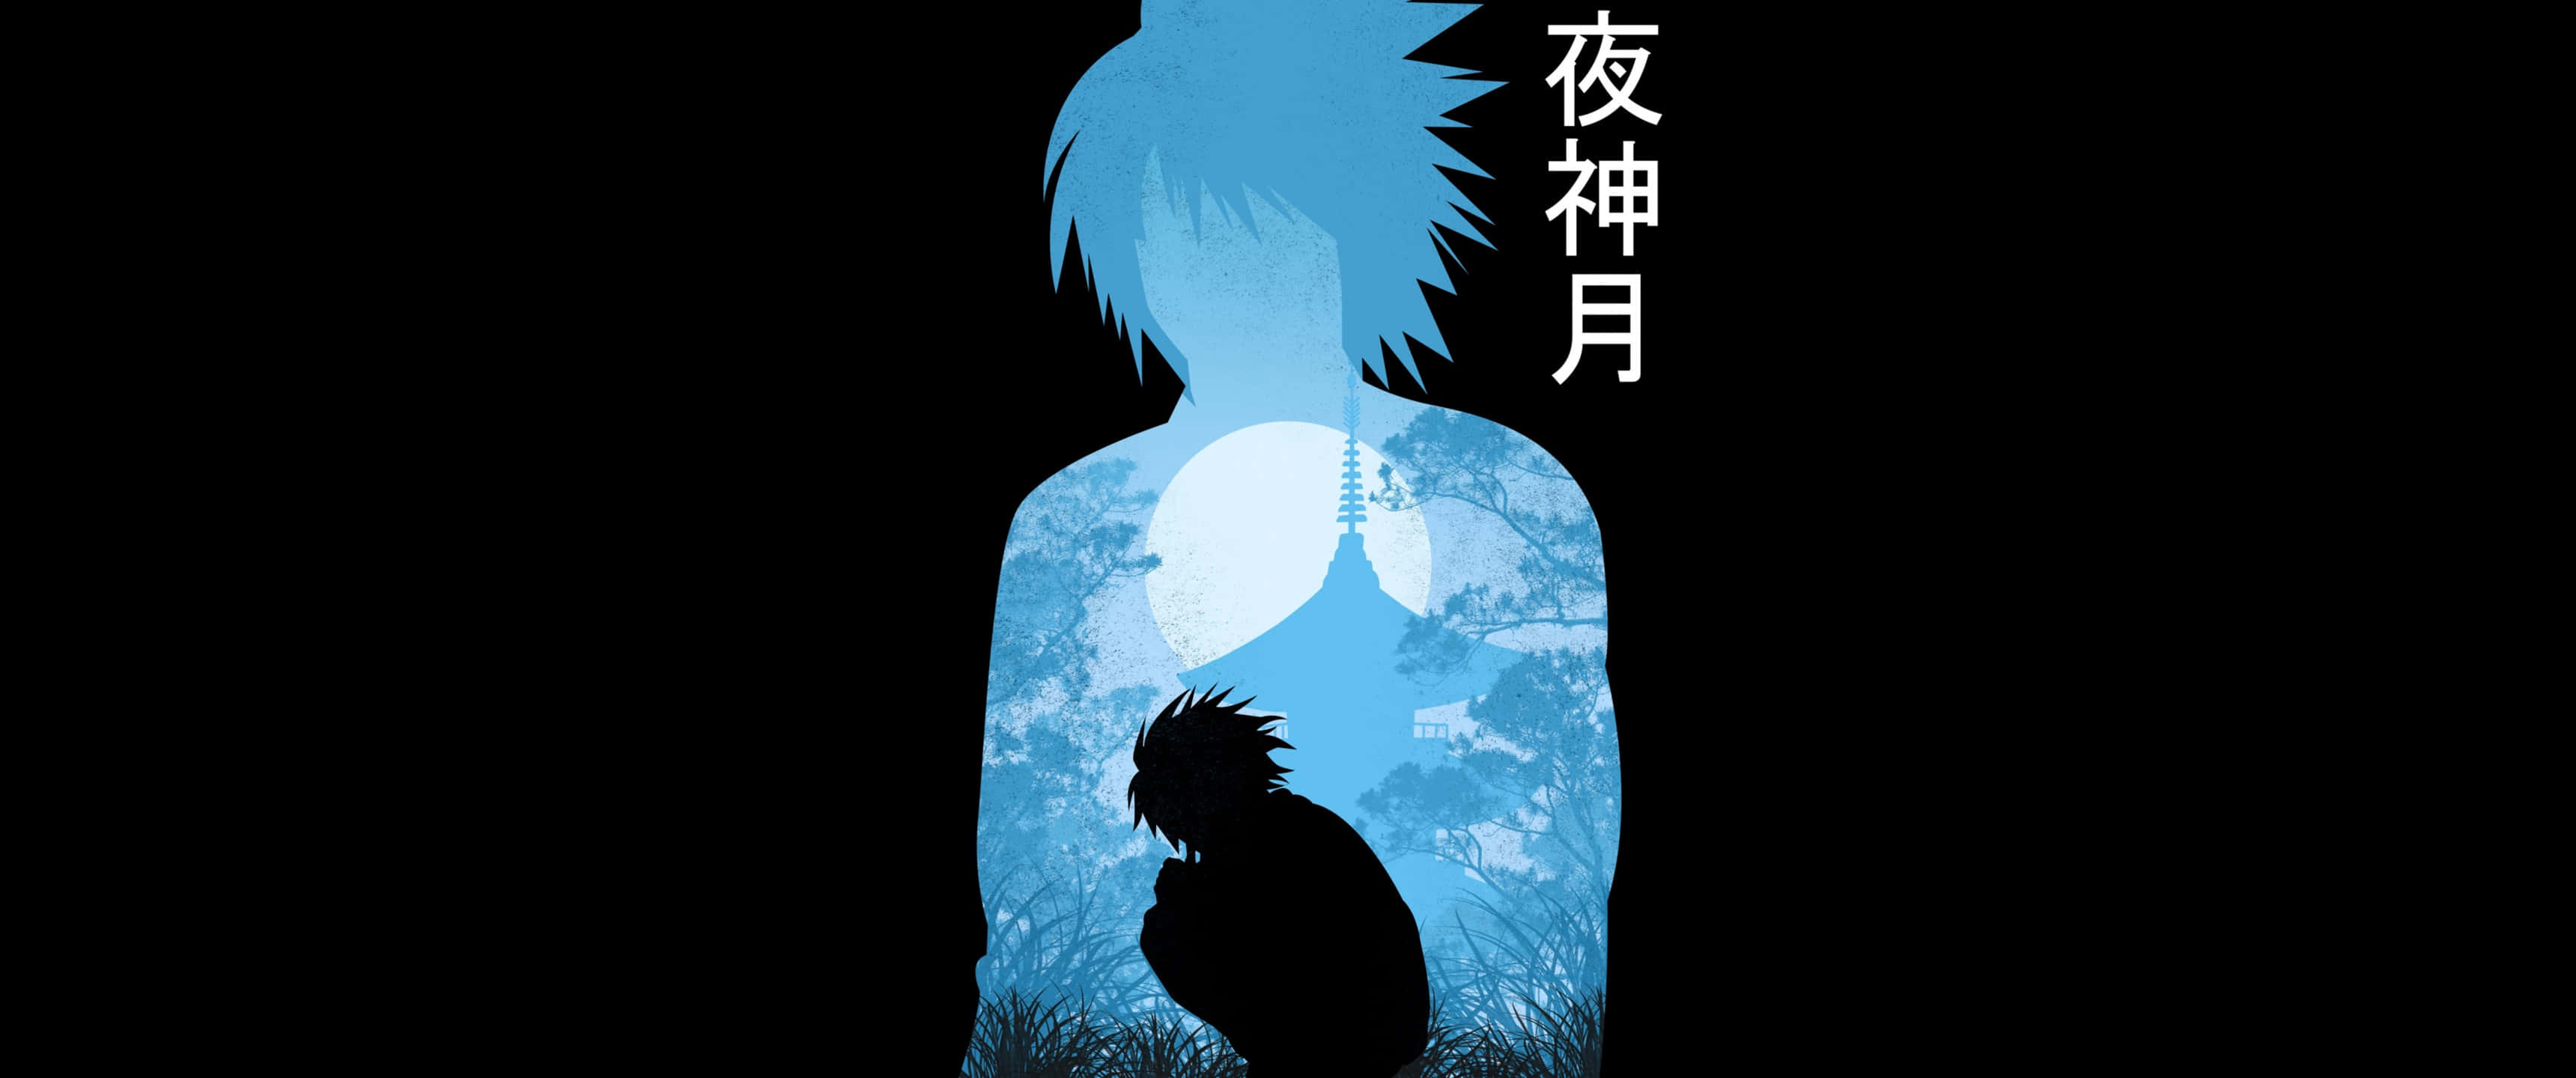 Lightyagami, Hovedpersonen I Anime-serien Death Note.